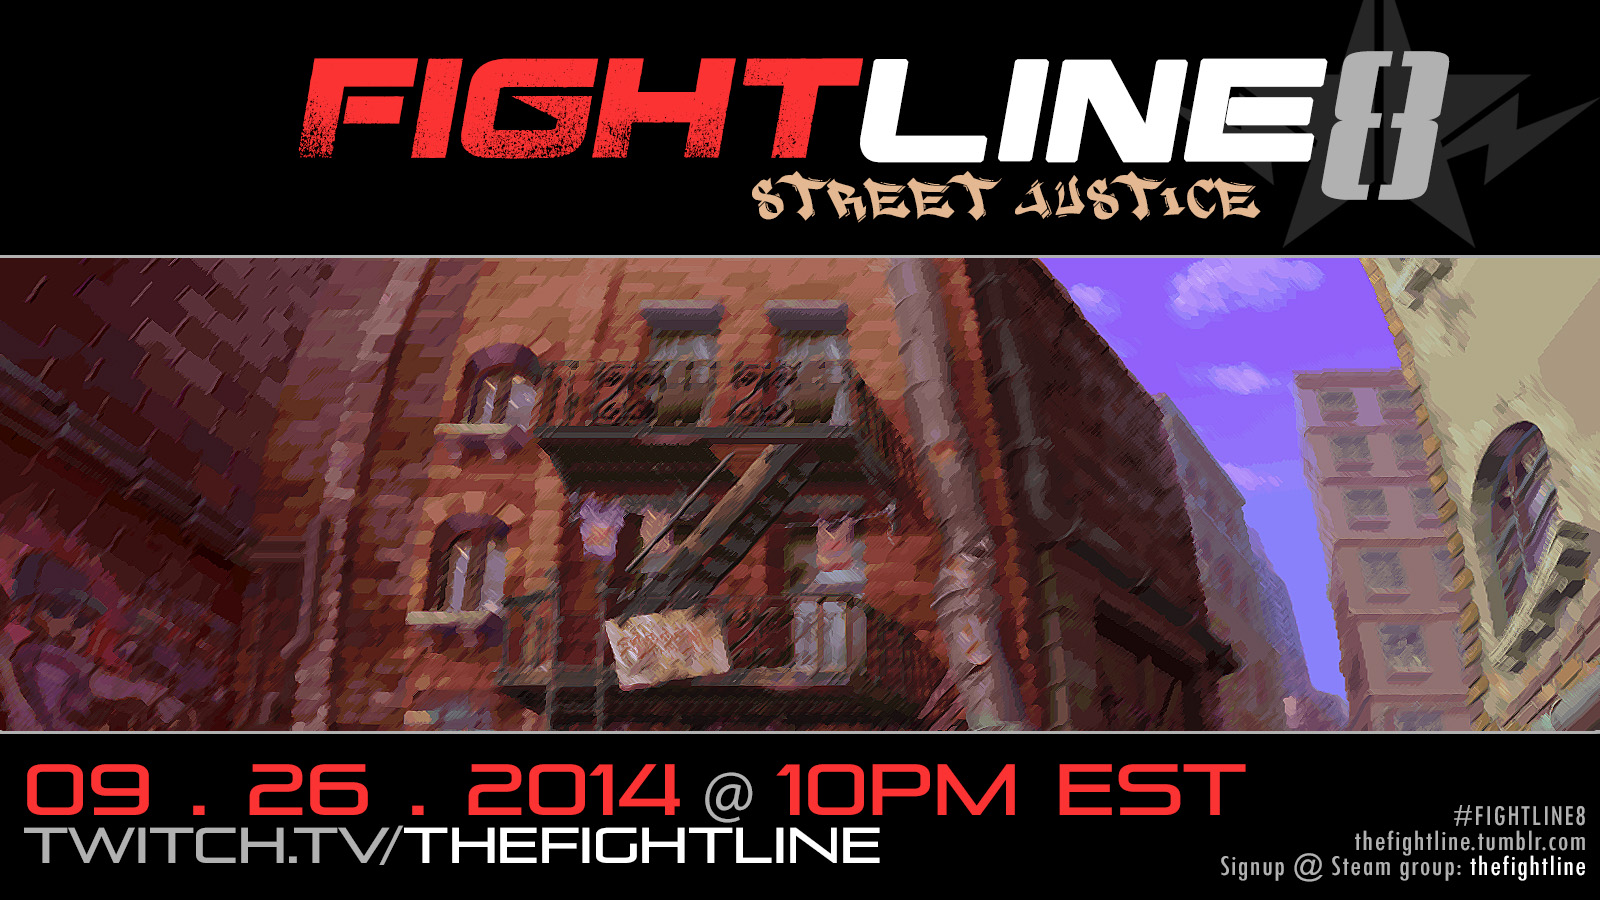 [IMAGE] Fightline 8 Promo